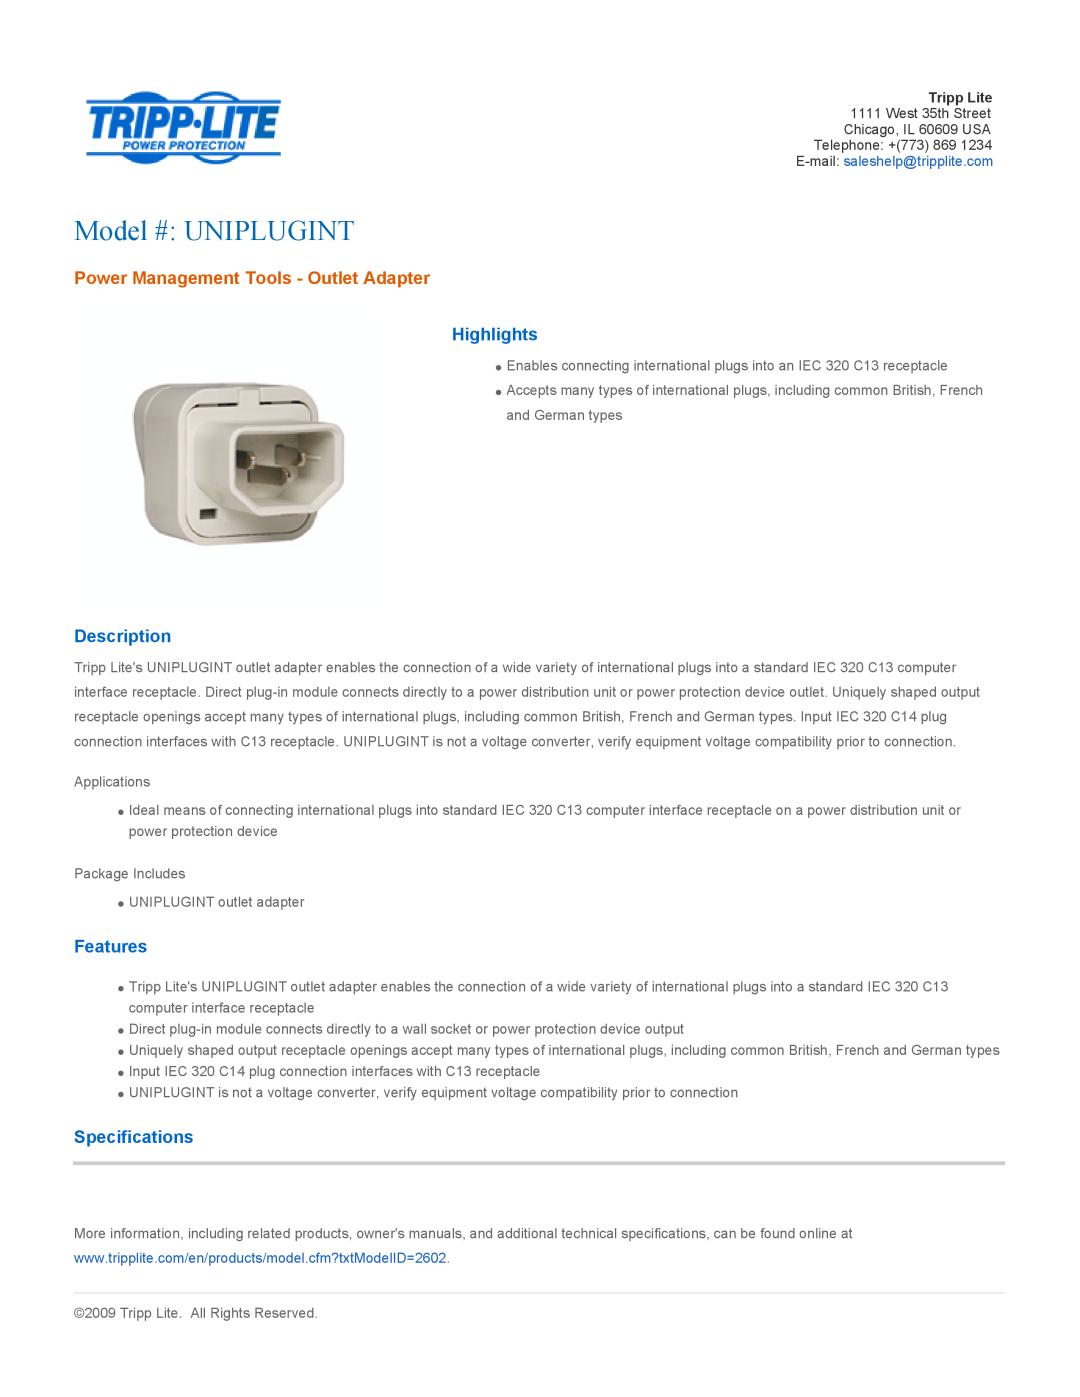 Tripp Lite specifications Model # UNIPLUGINT, Power Management Tools - Outlet Adapter, Highlights, Description 